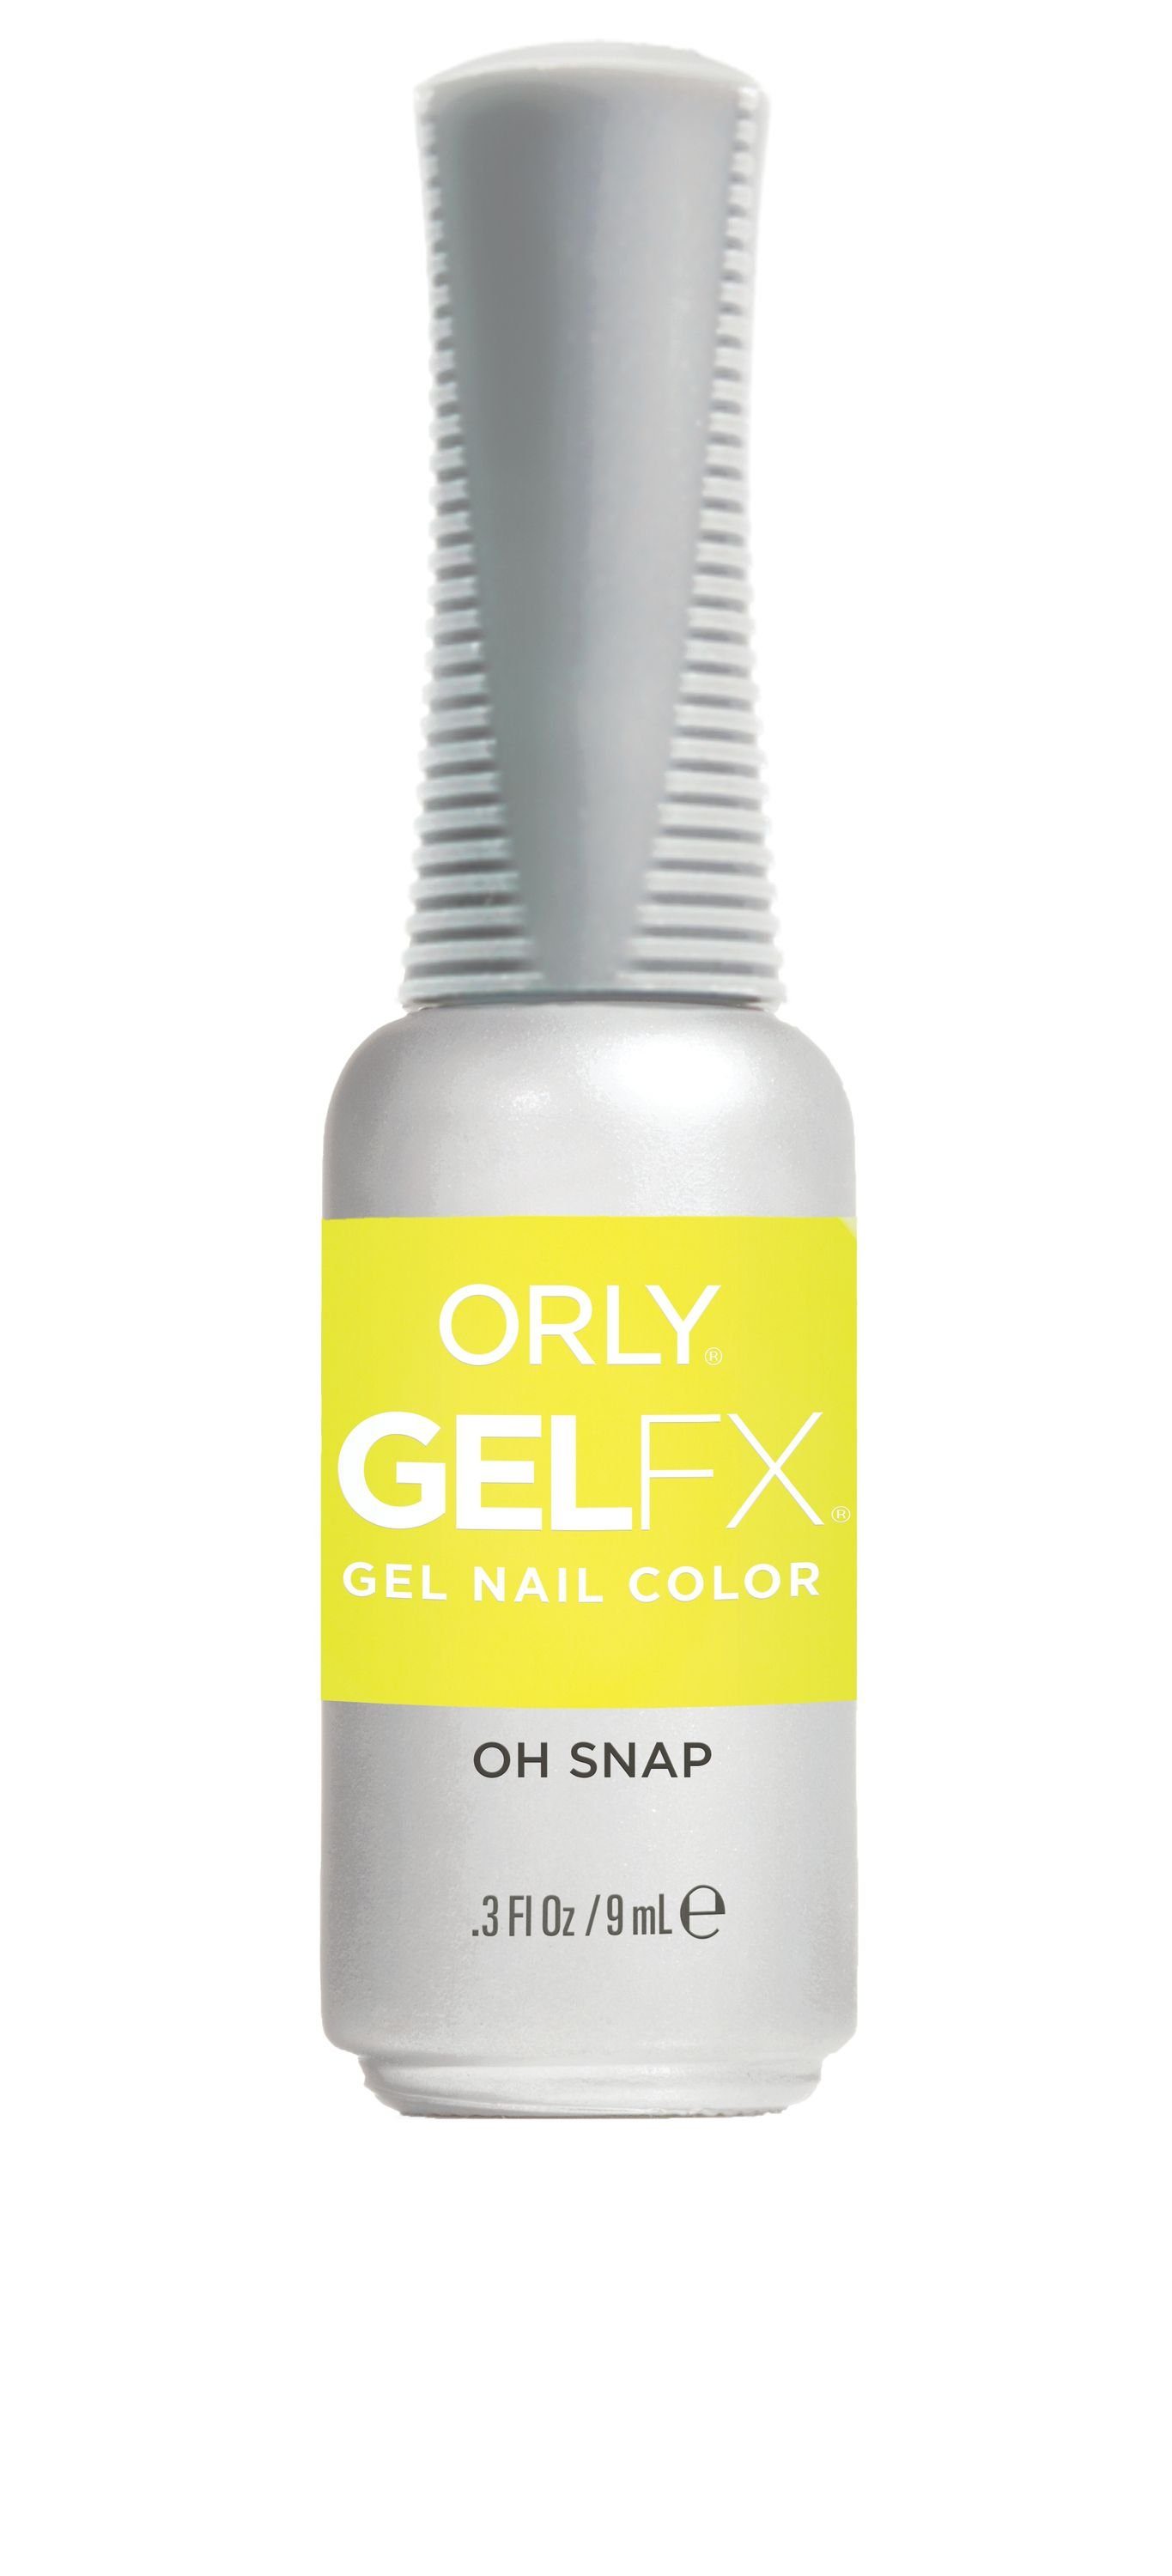 ORLY UV-Nagellack GEL FX 9ML Snap, Oh